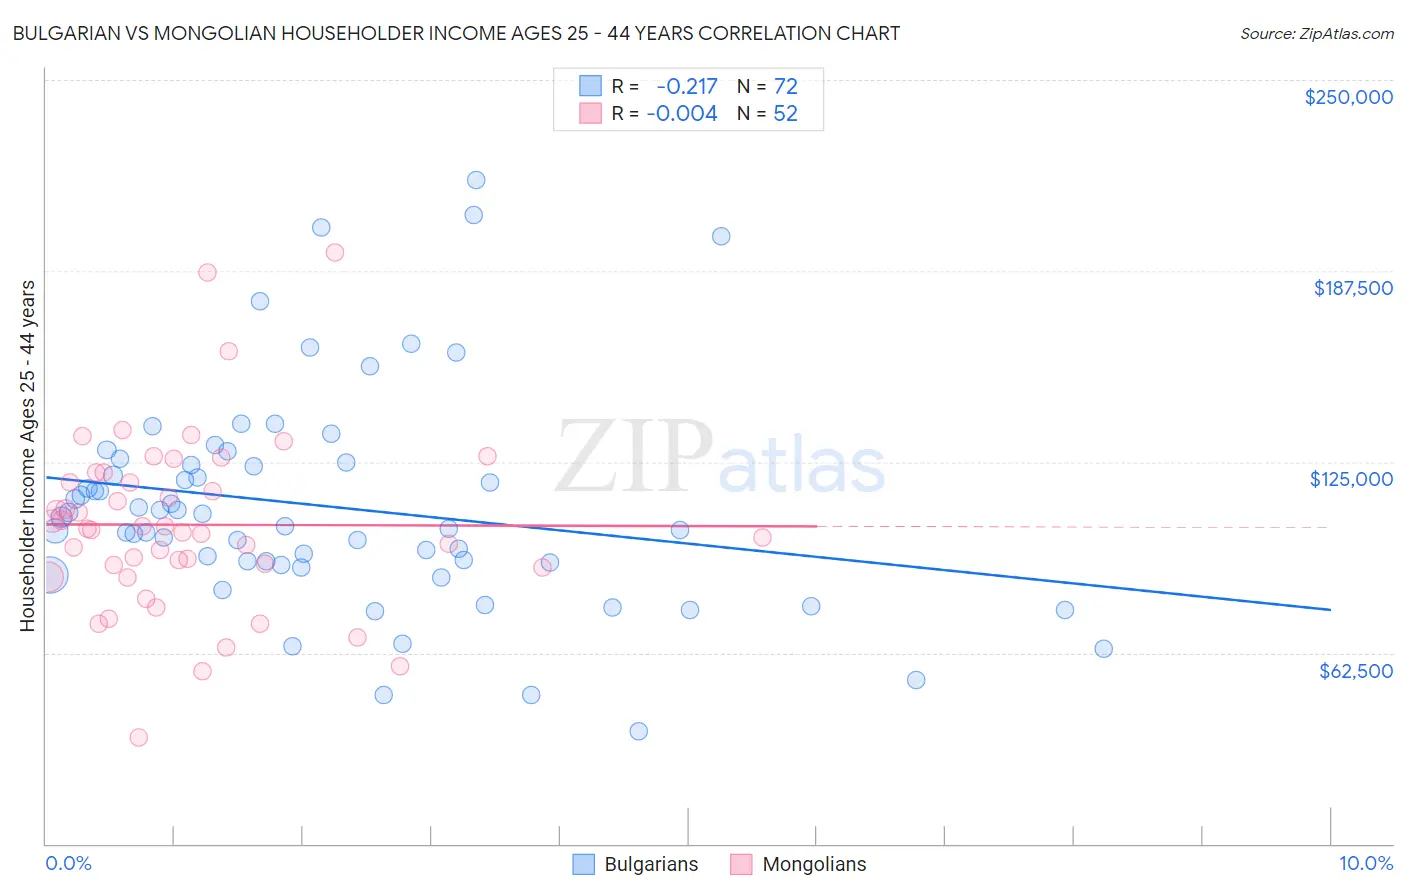 Bulgarian vs Mongolian Householder Income Ages 25 - 44 years